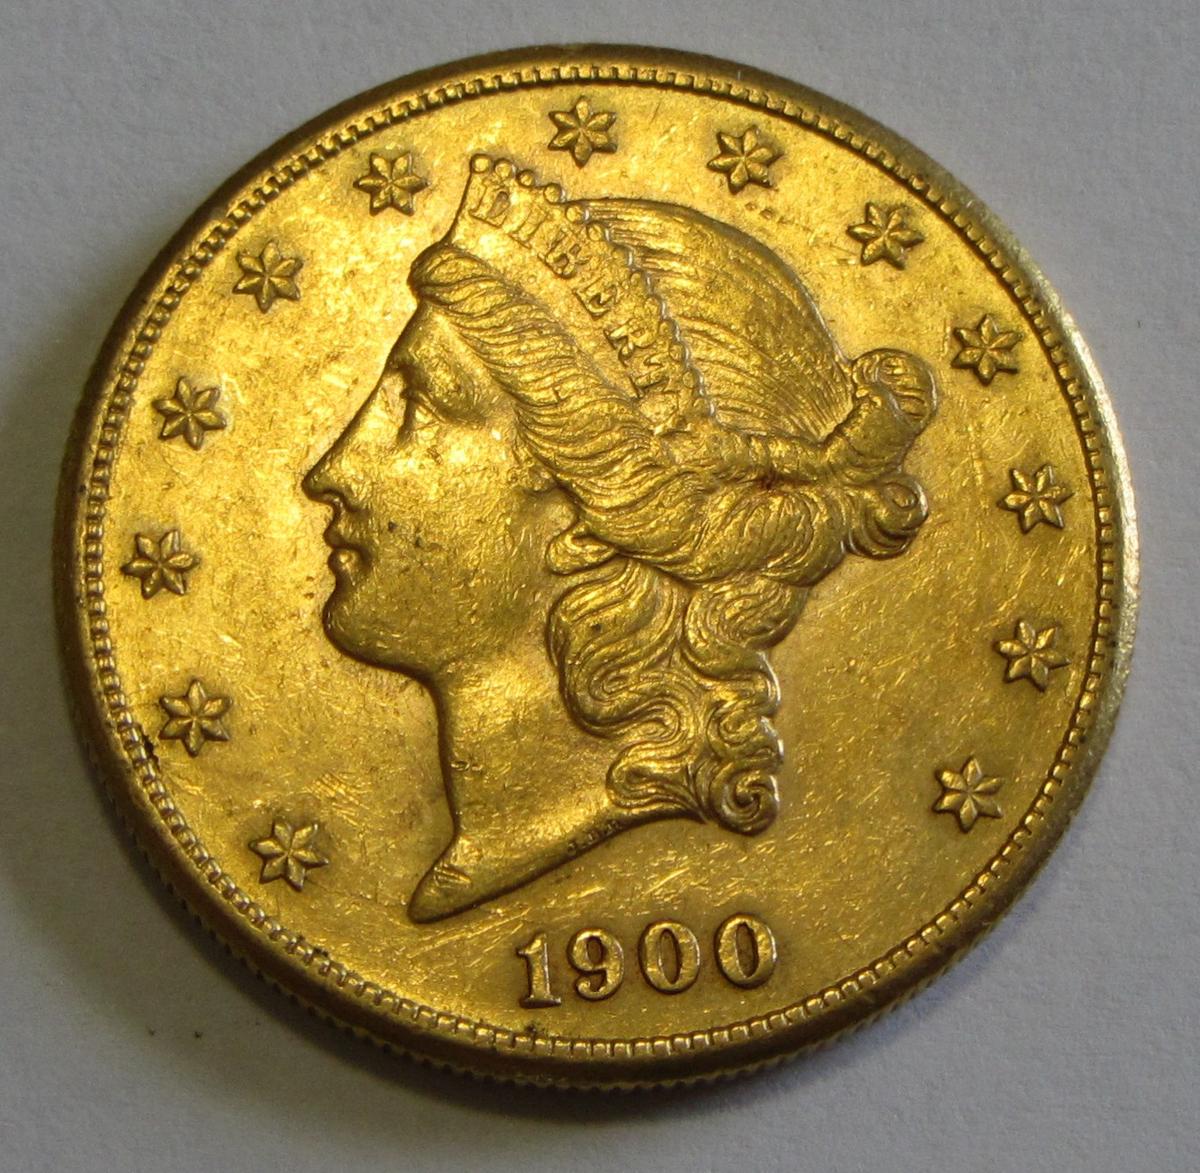 $20 GOLD DOUBLE LIBERTY EAGLE 1900